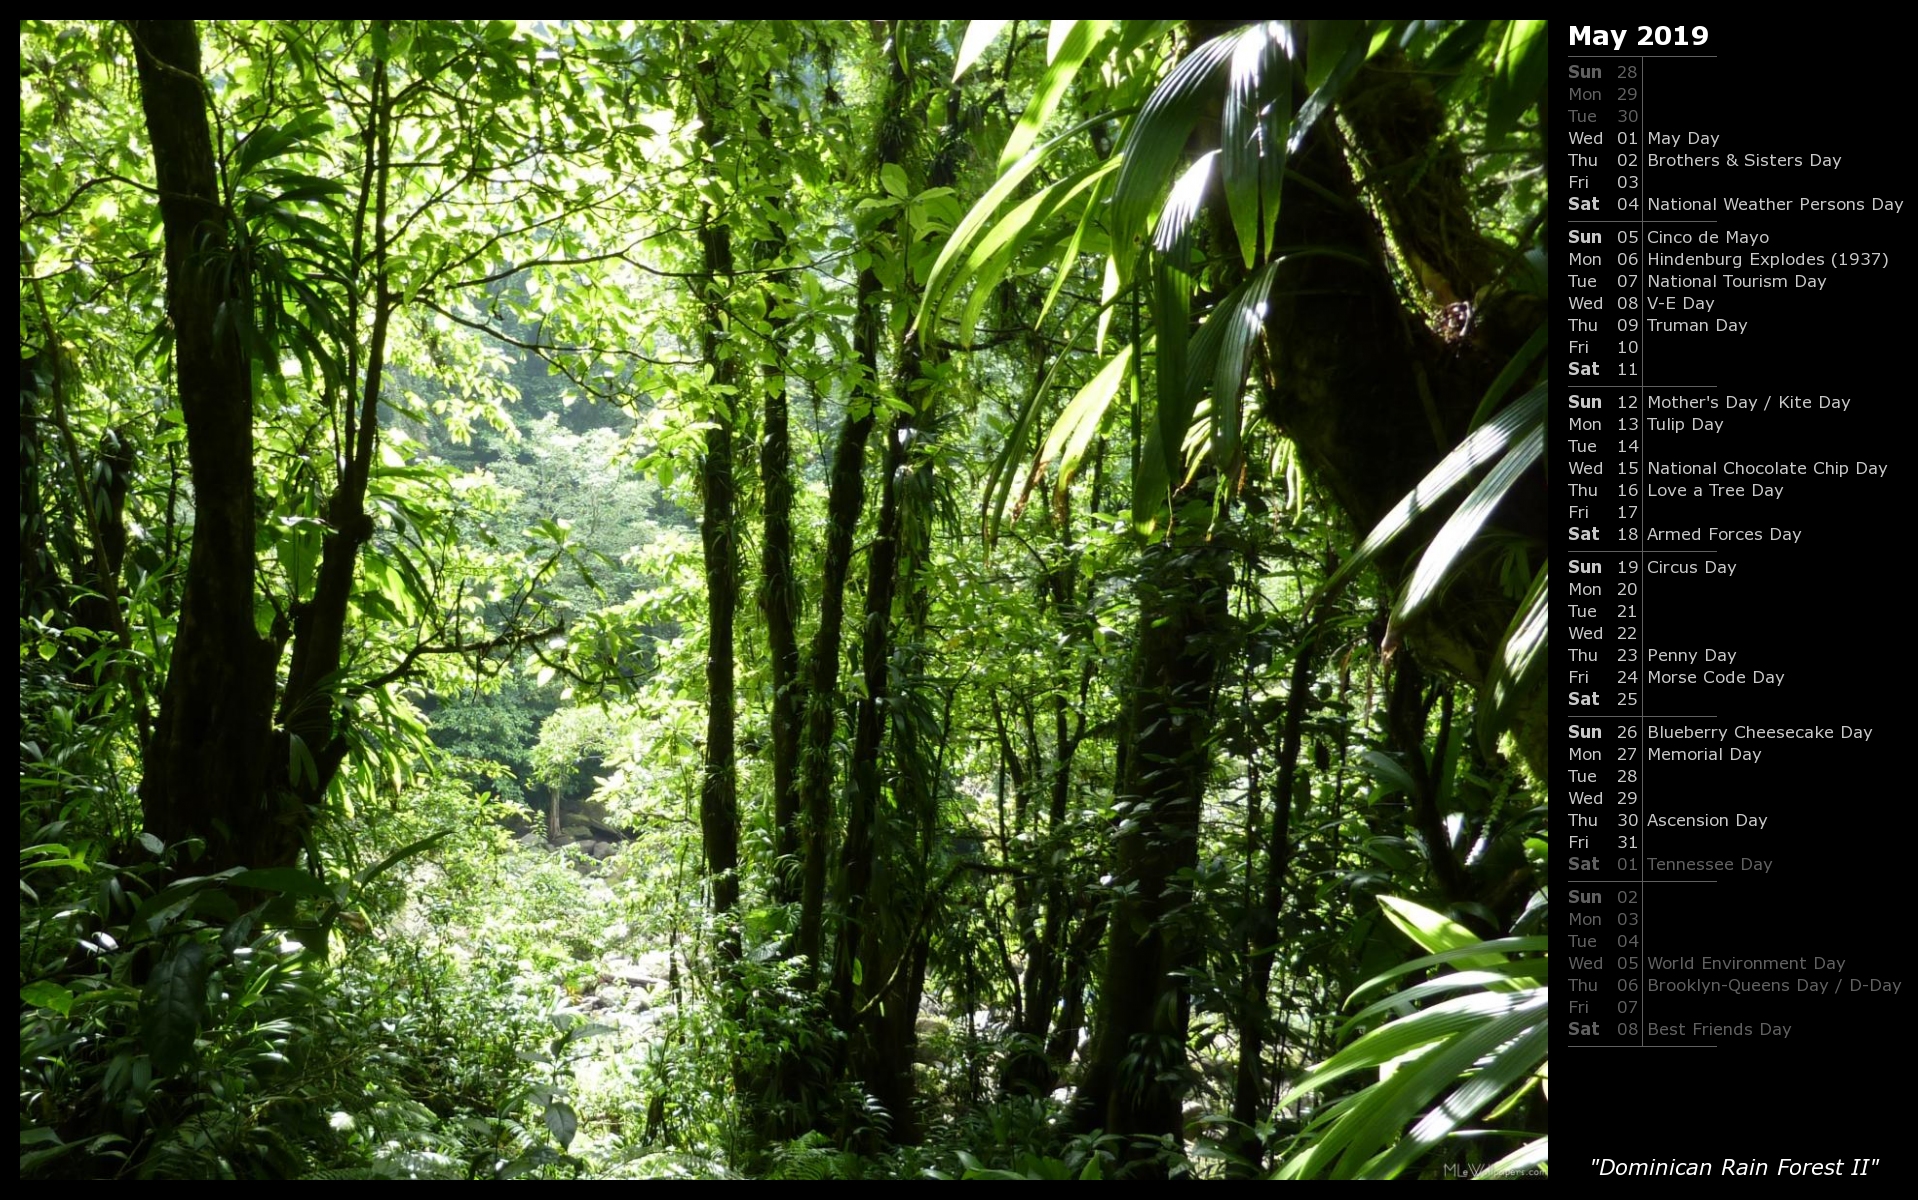 MLeWallpapers.com - Dominican Rain Forest II (Calendar)